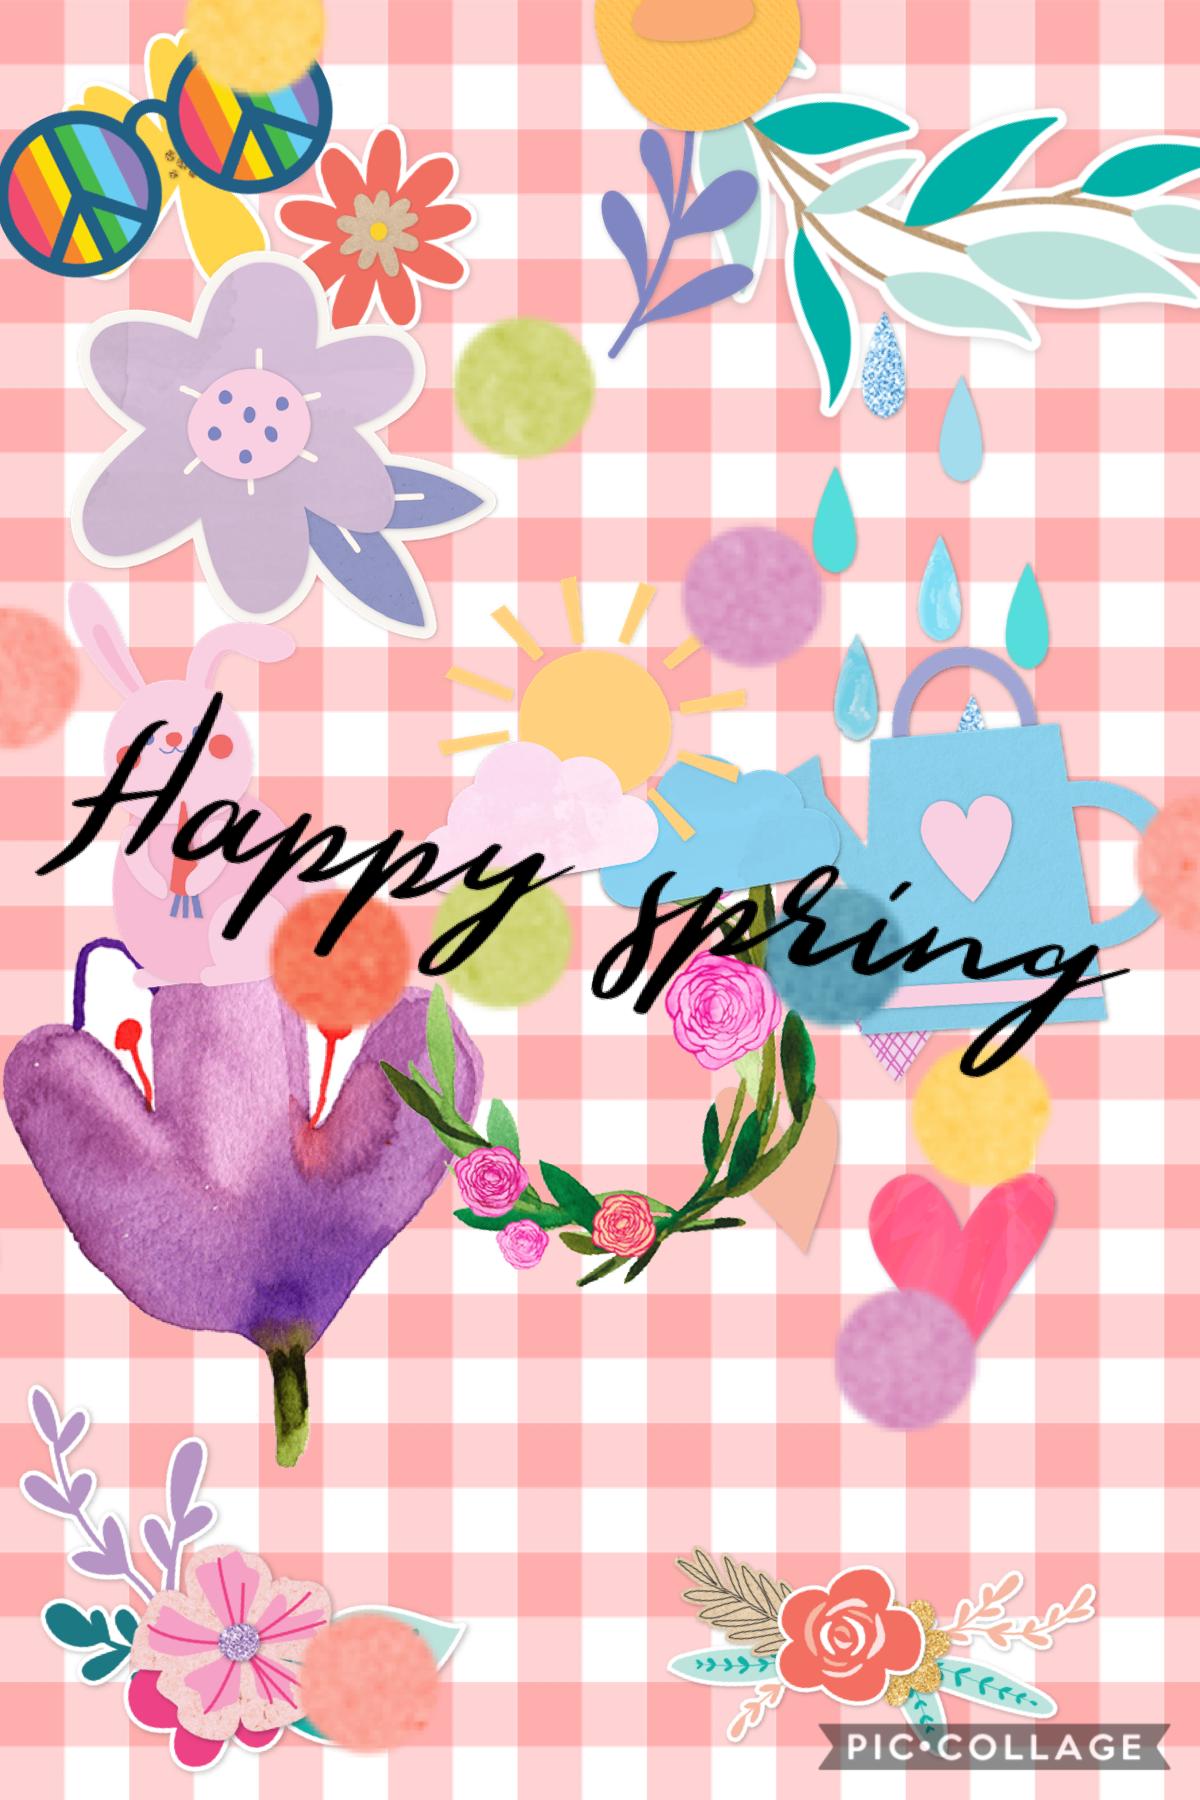 Happy spring!!!!!!!!!